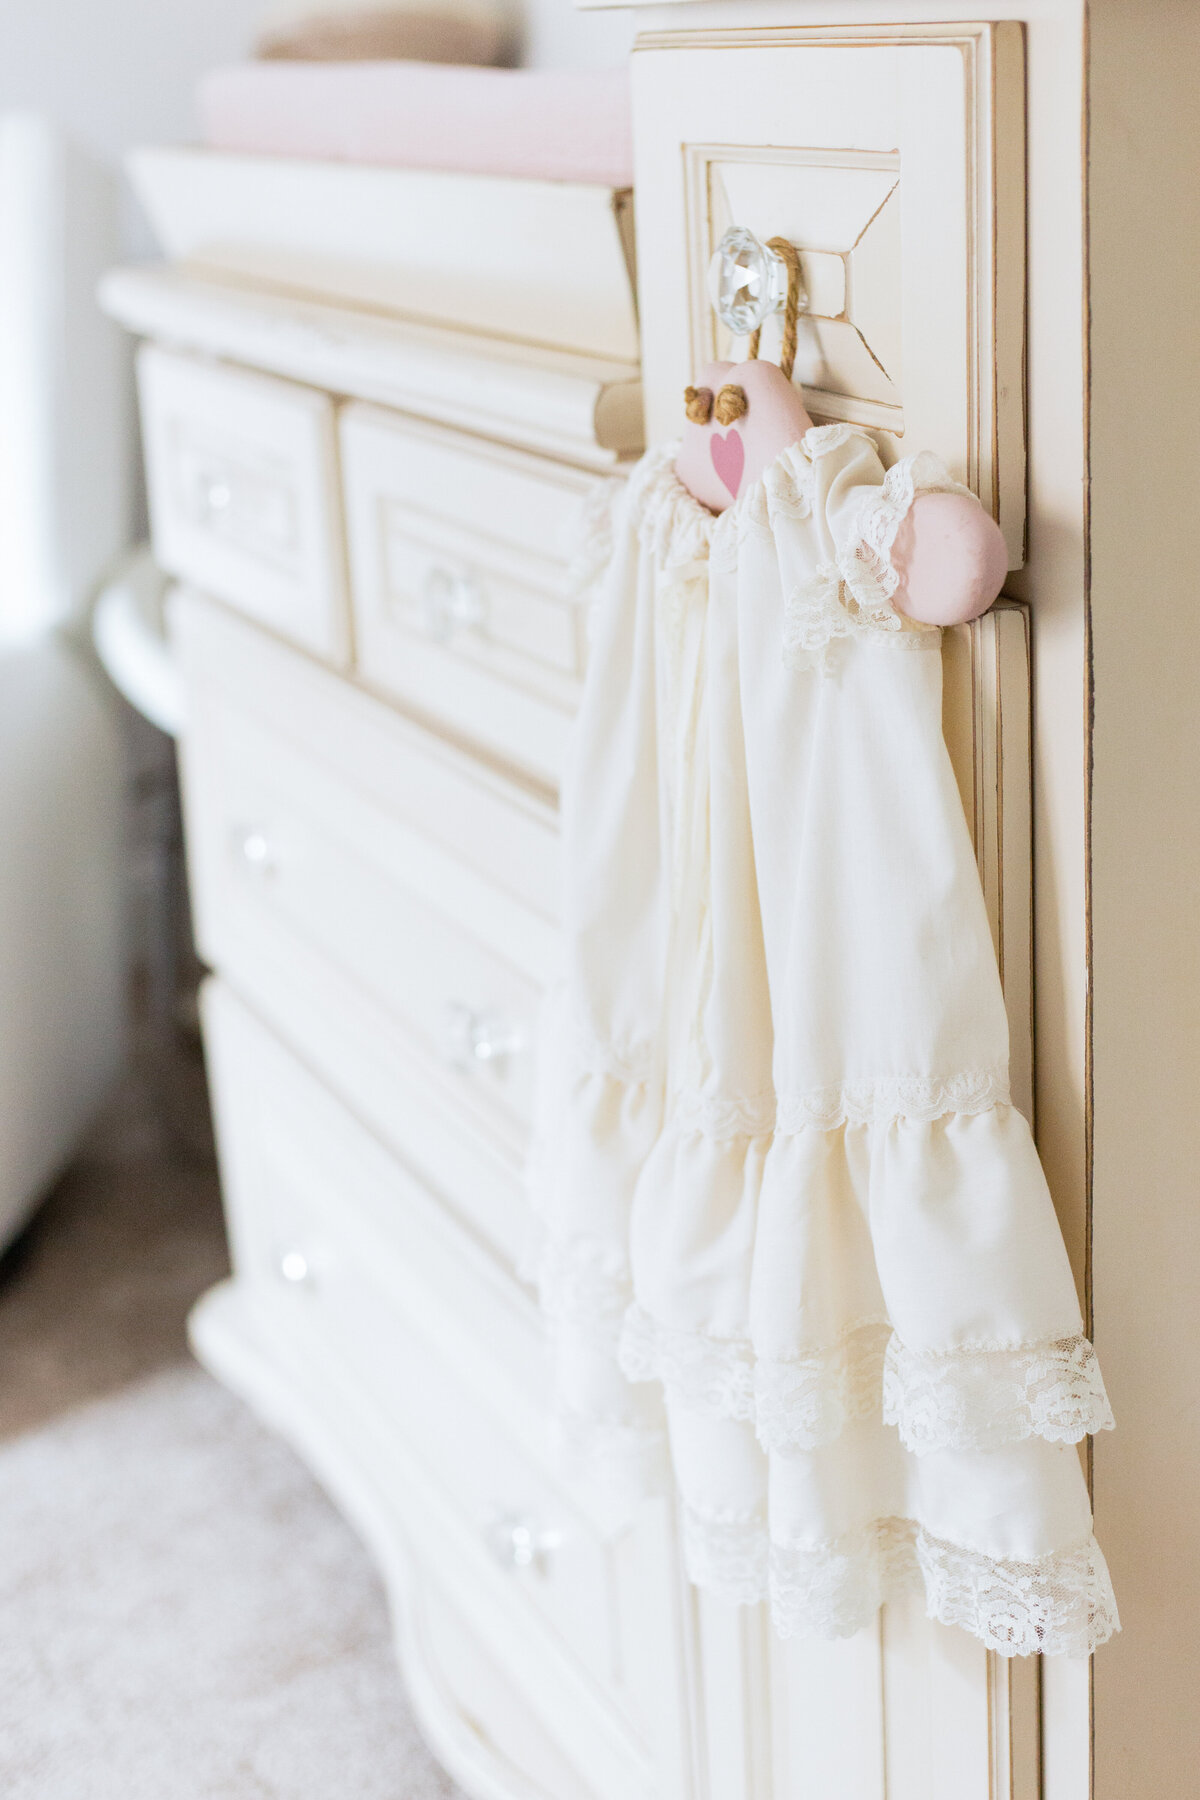 christening baby gown in nursery